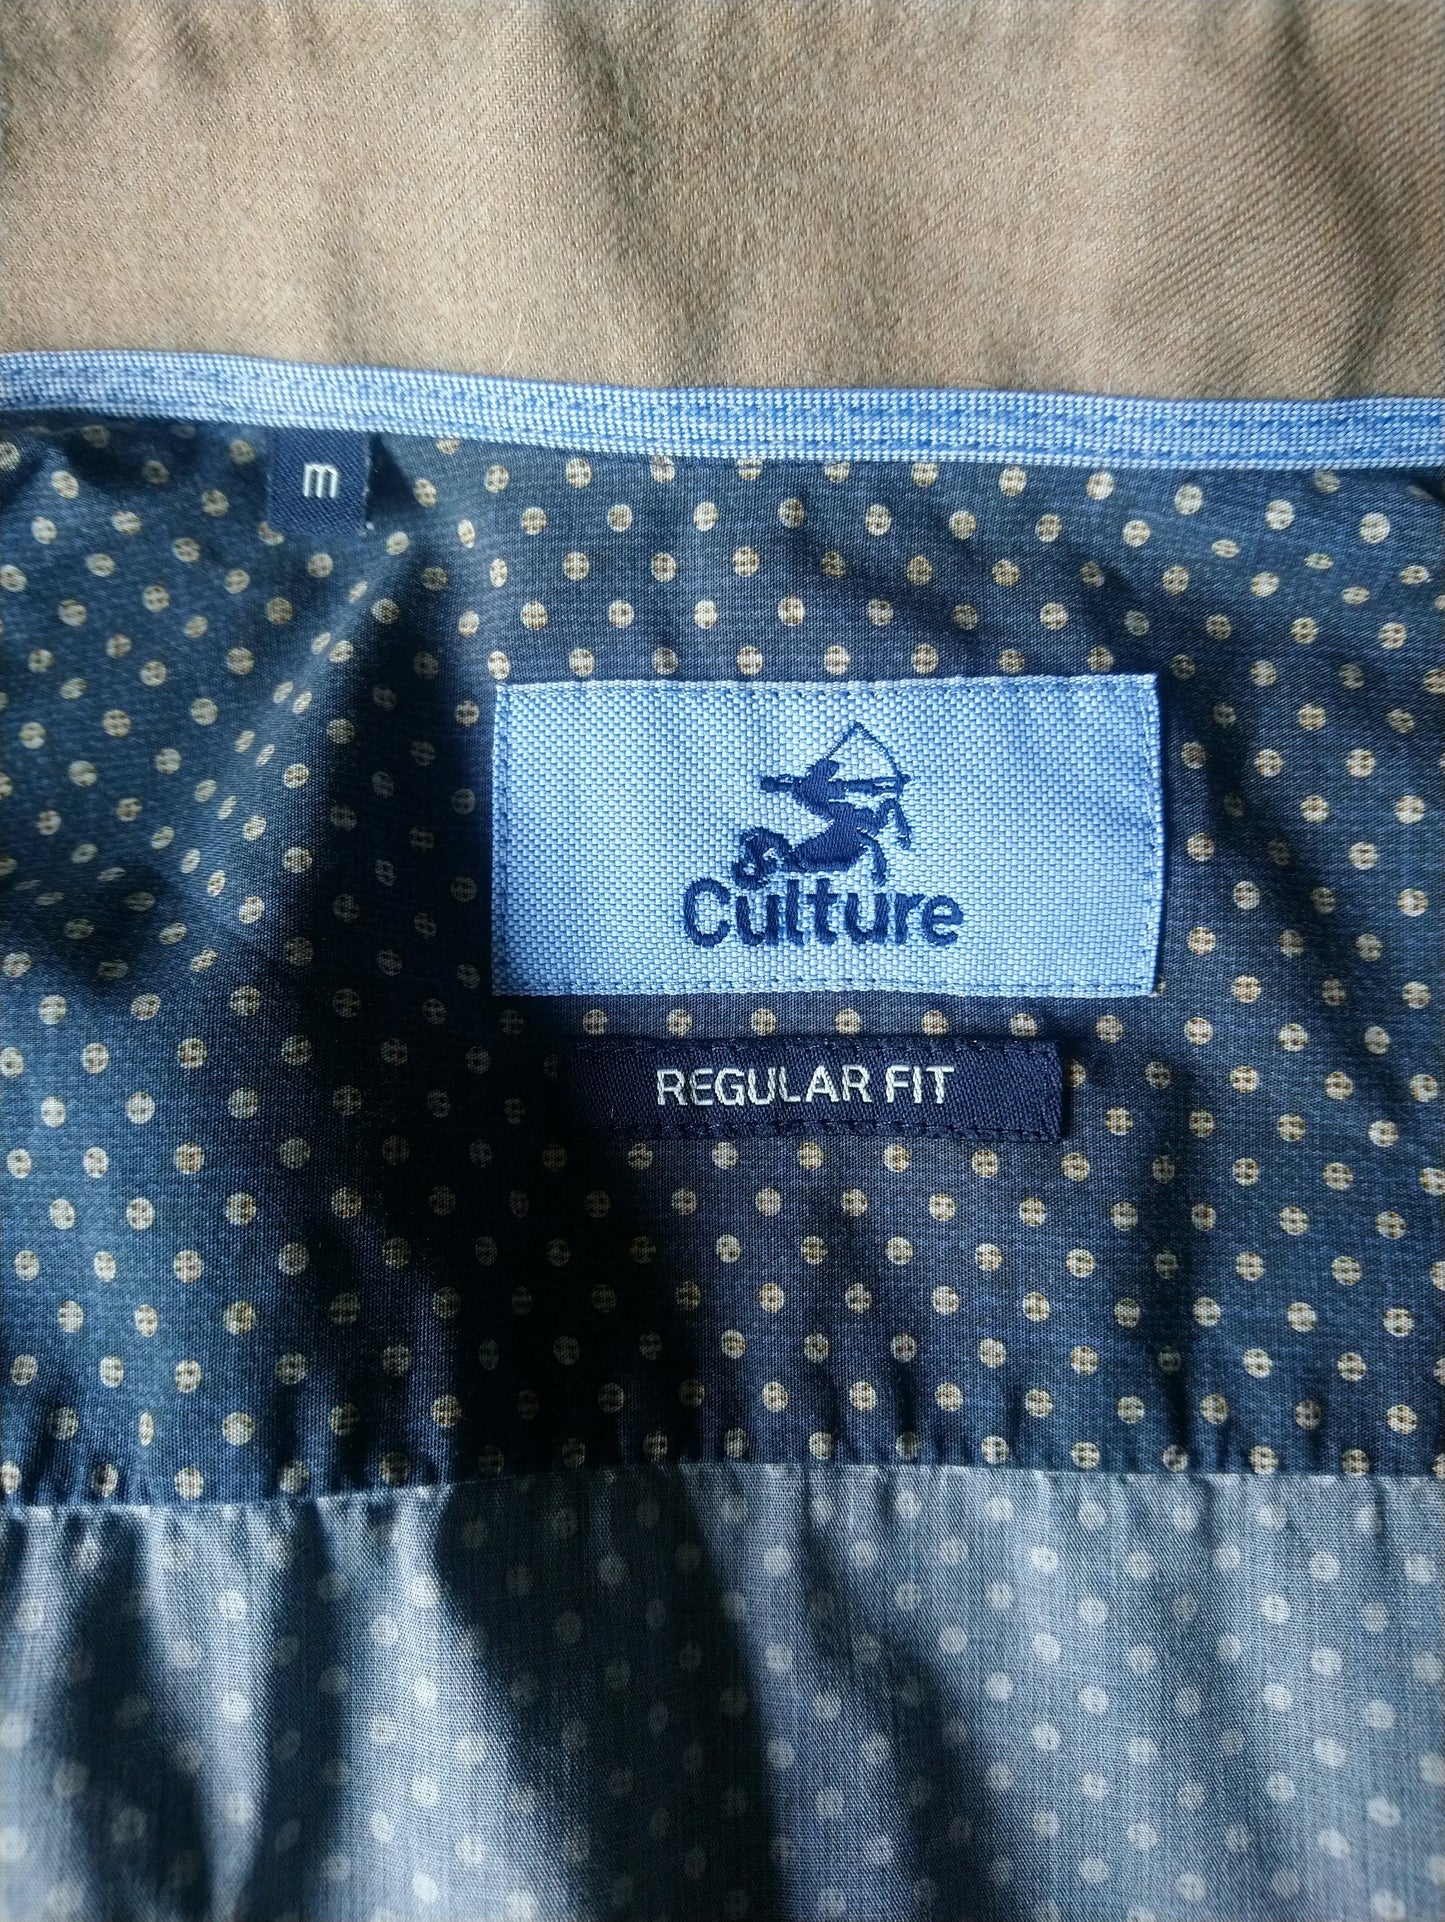 Culture overhemd. Blauw Beige Groene print. Maat M. Regular Fit.